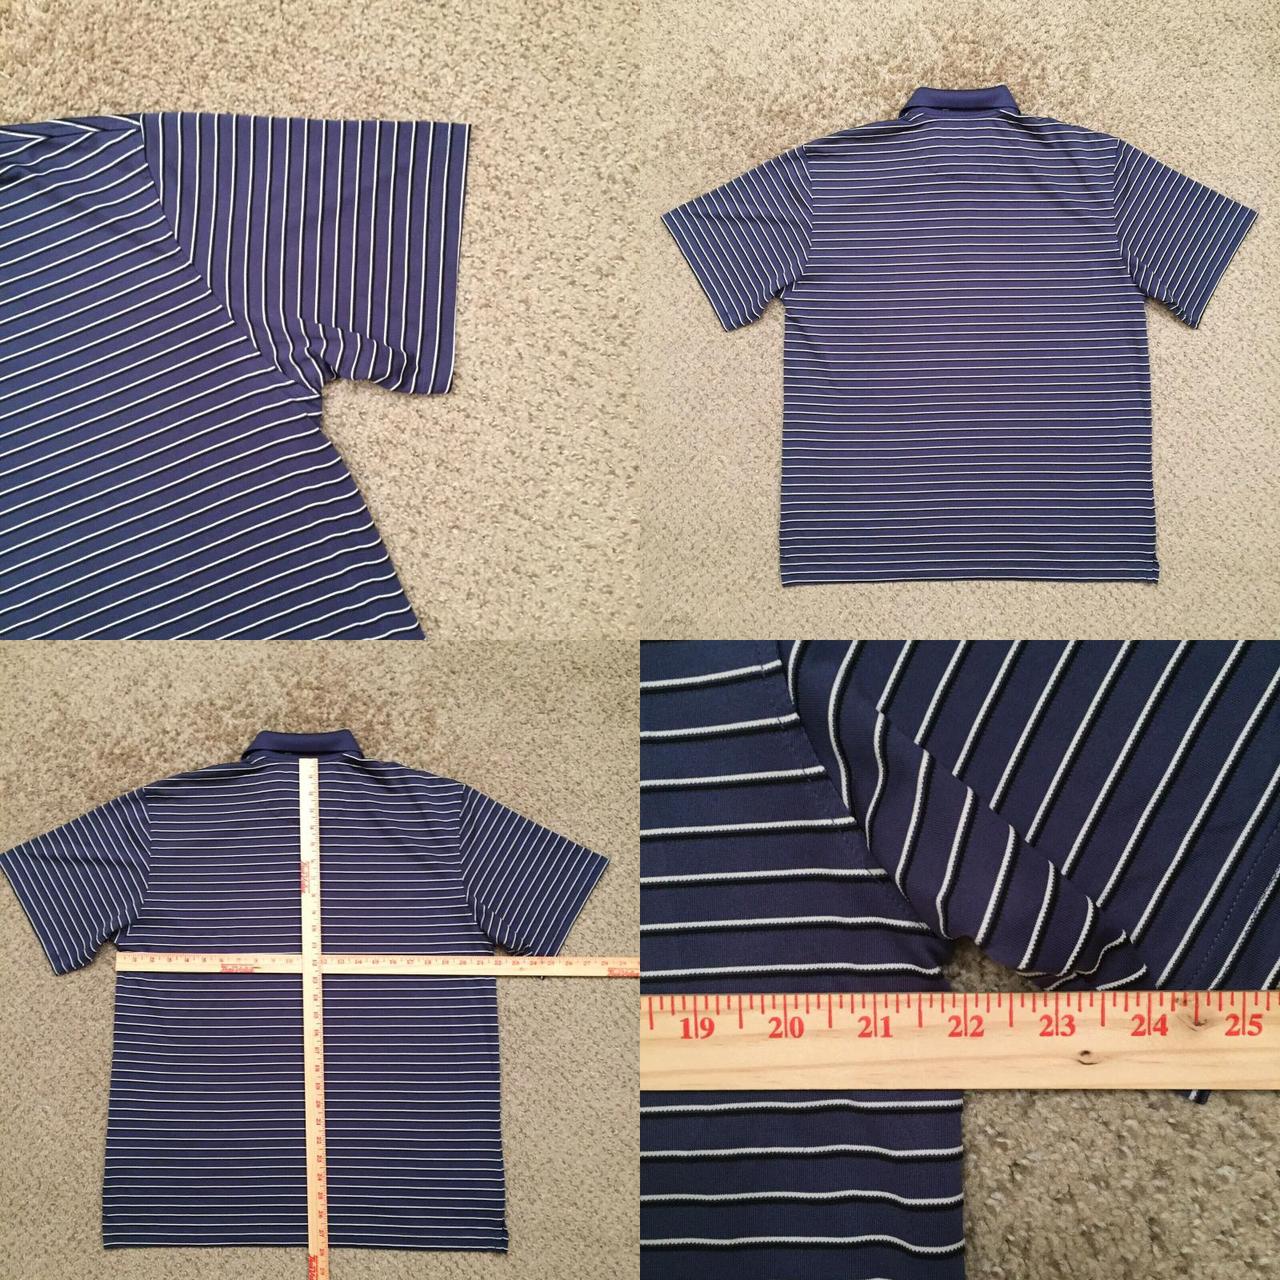 Product Image 4 - Arrow Mens Medium Blue/White/Black Striped